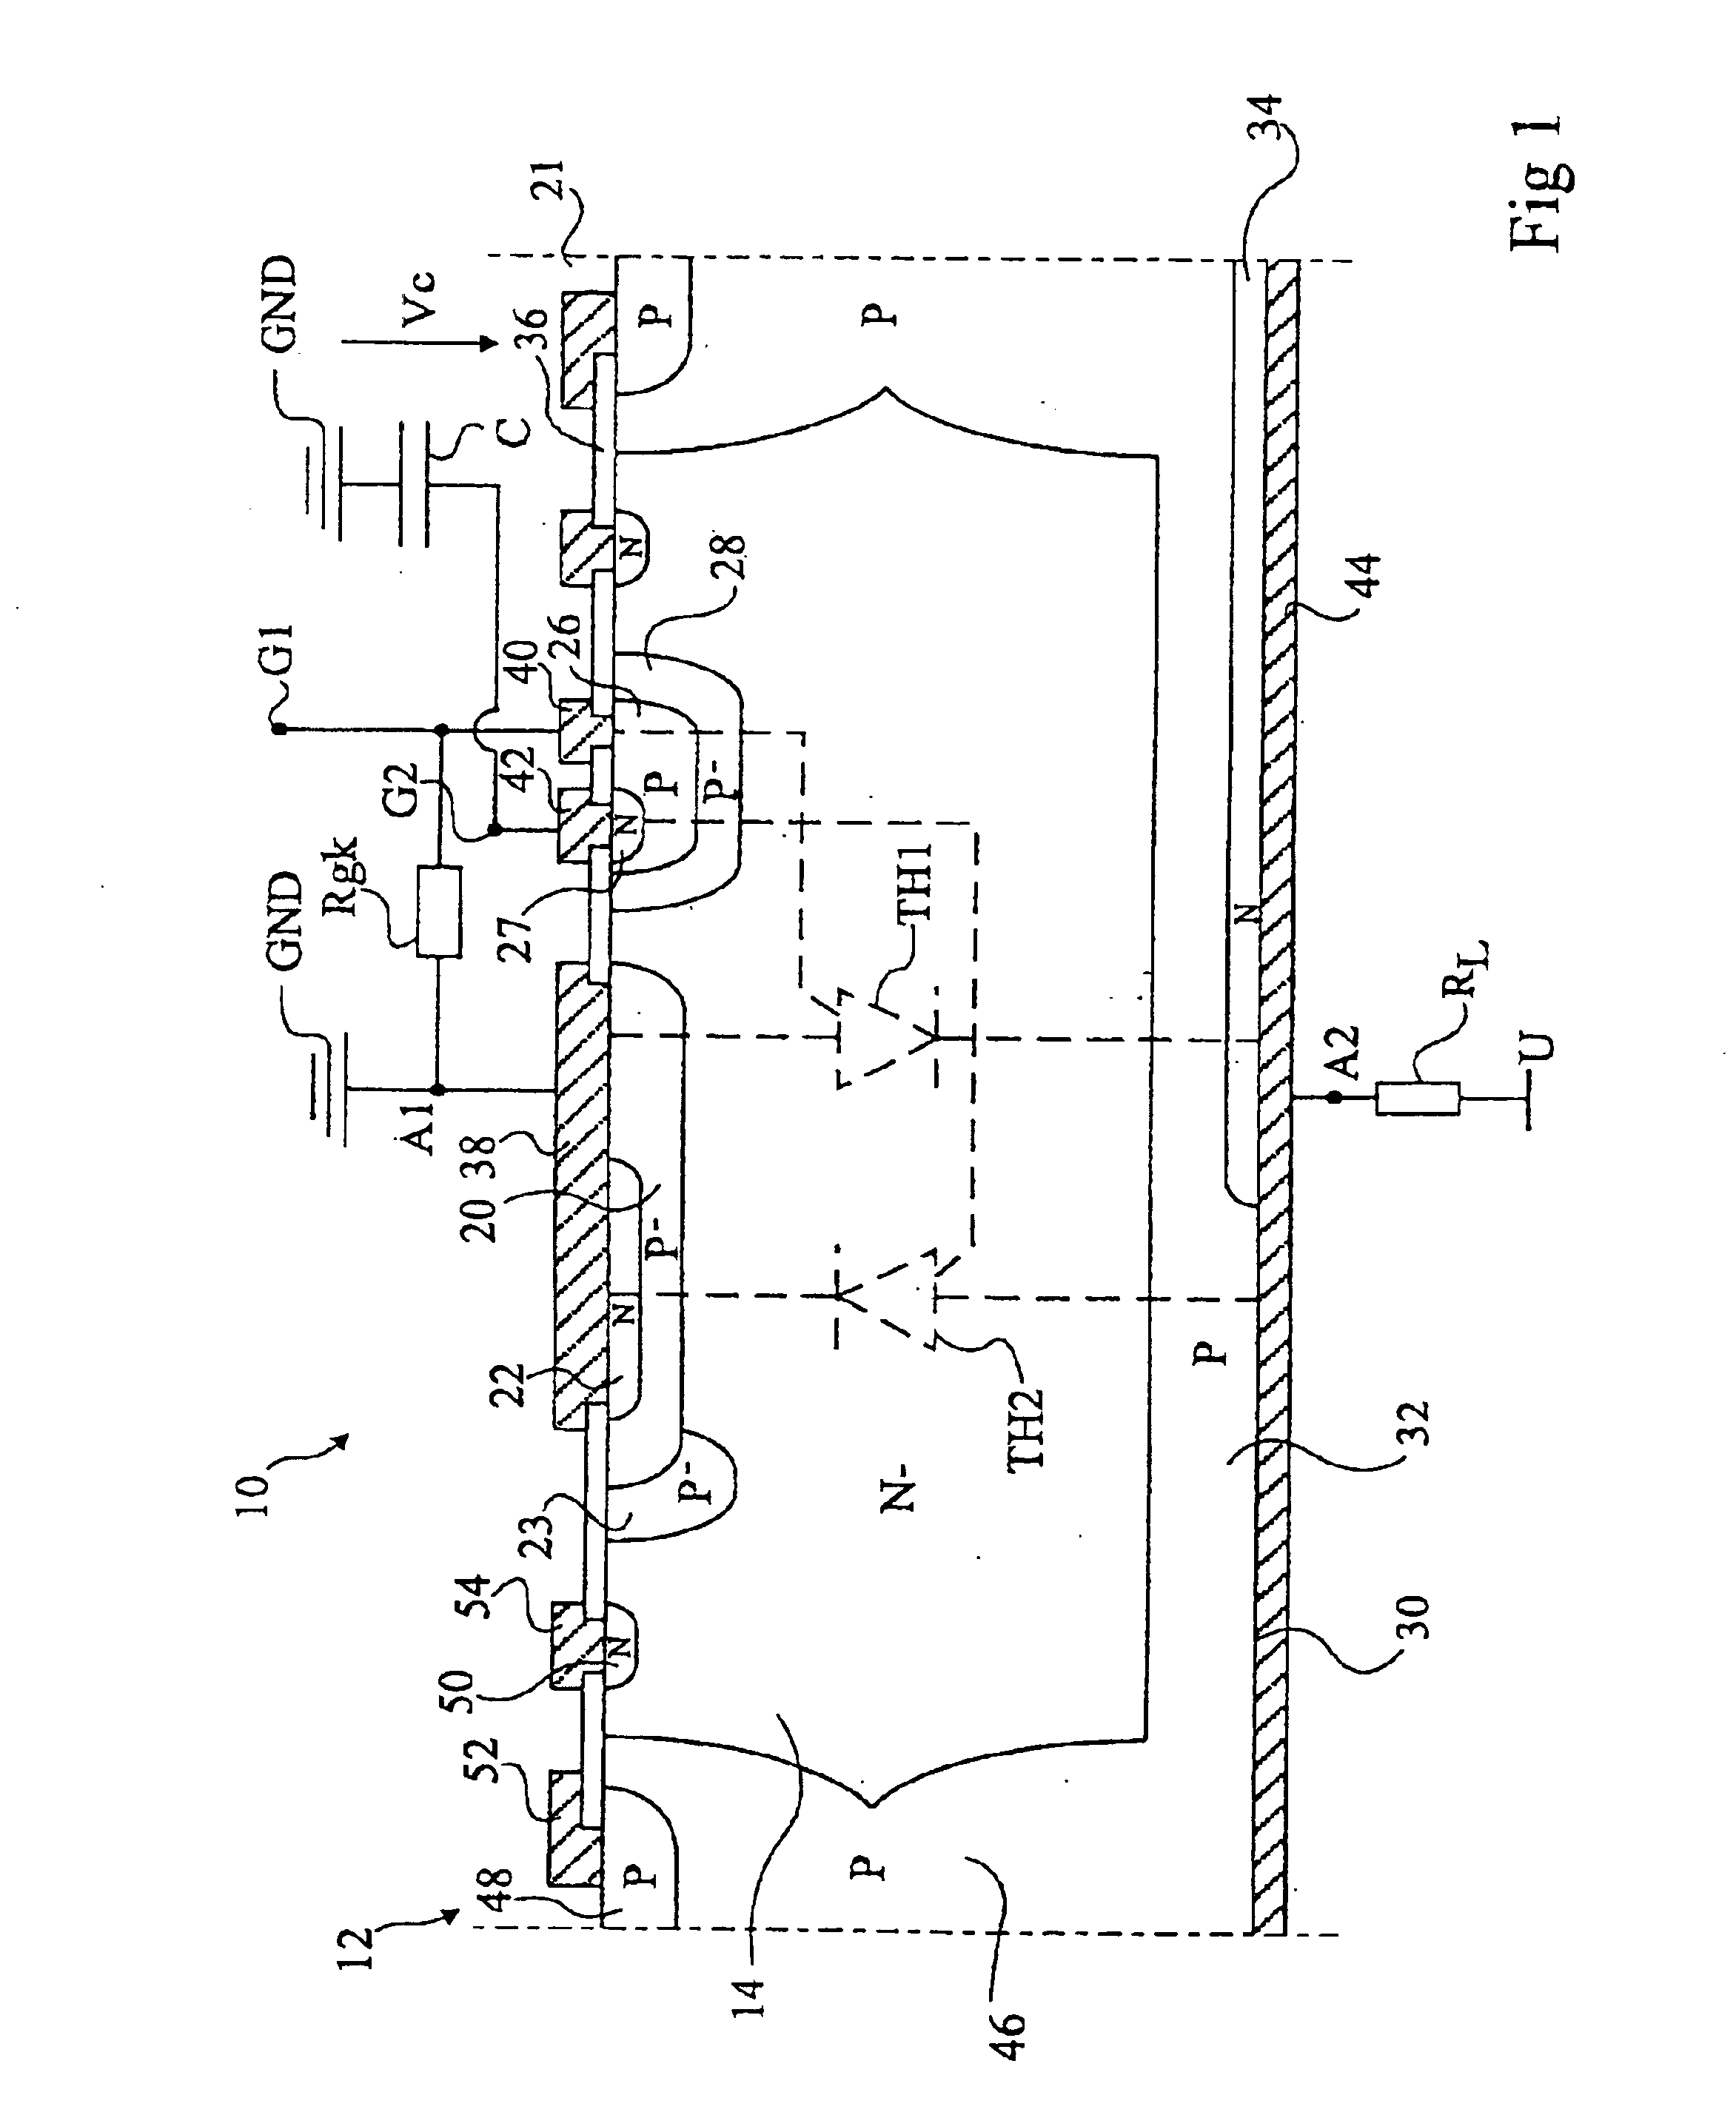 High-voltage bidirectional switch